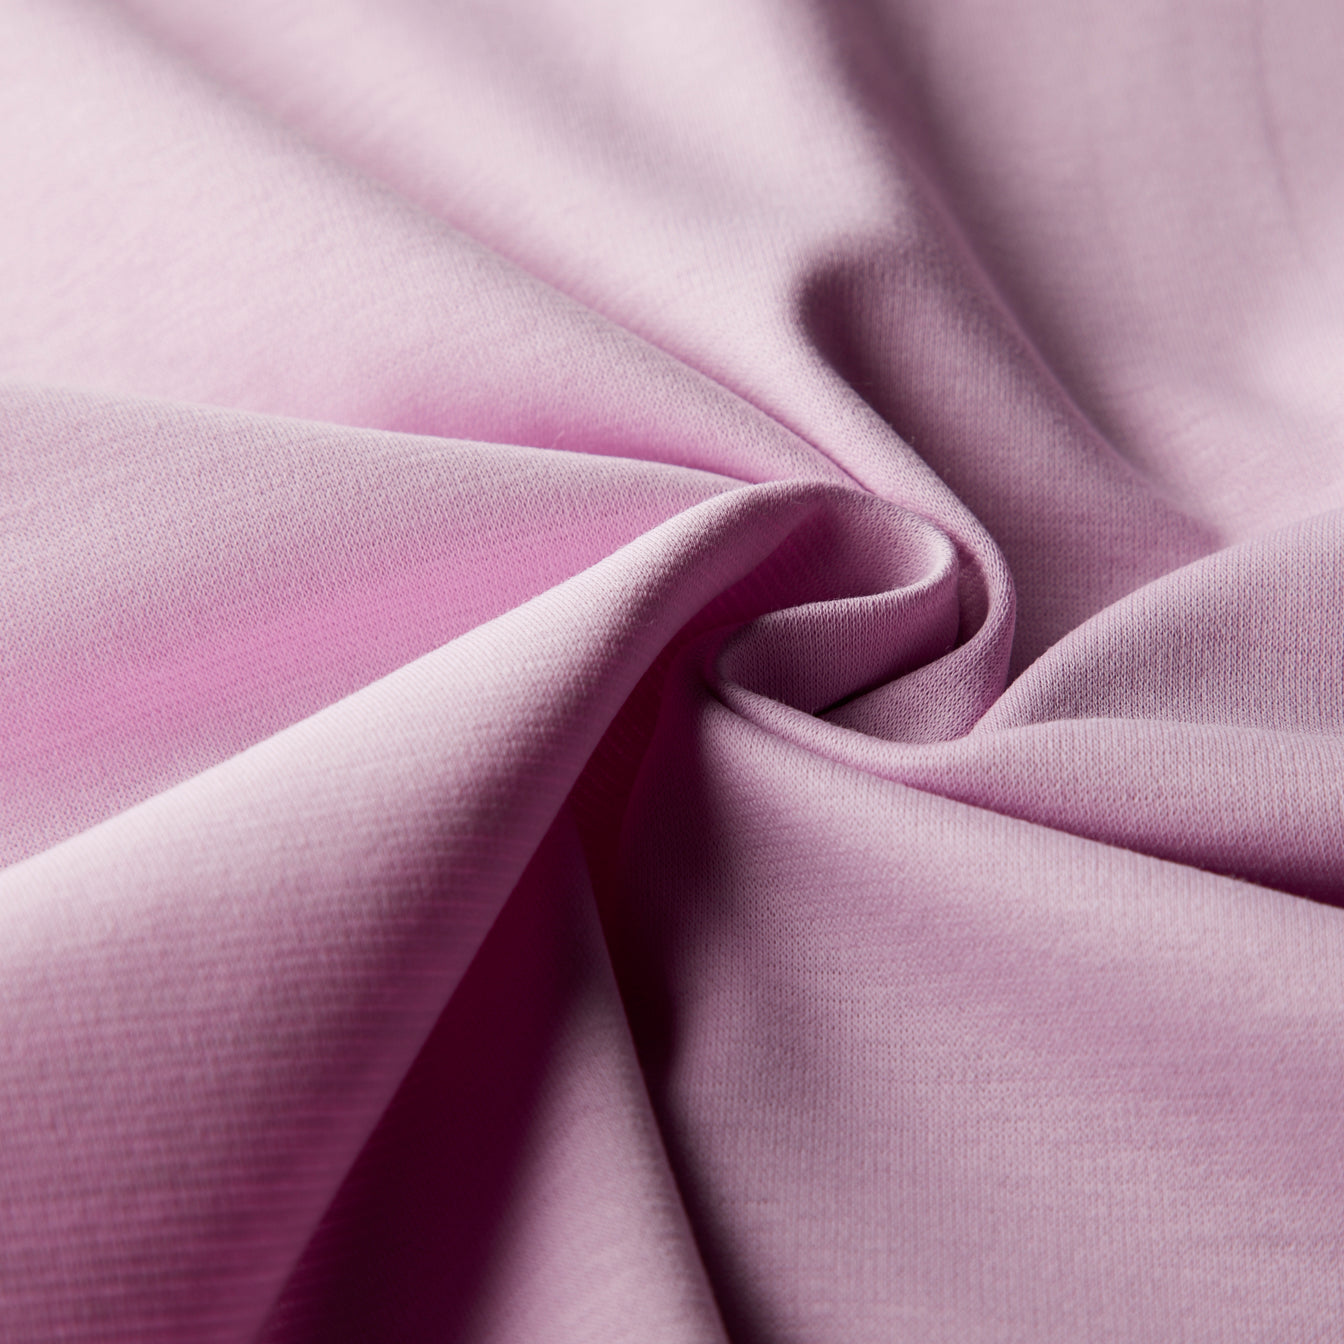 99-768 Knit fabric, Dull pink, Solid, 10 (Minimum 50)×160cm